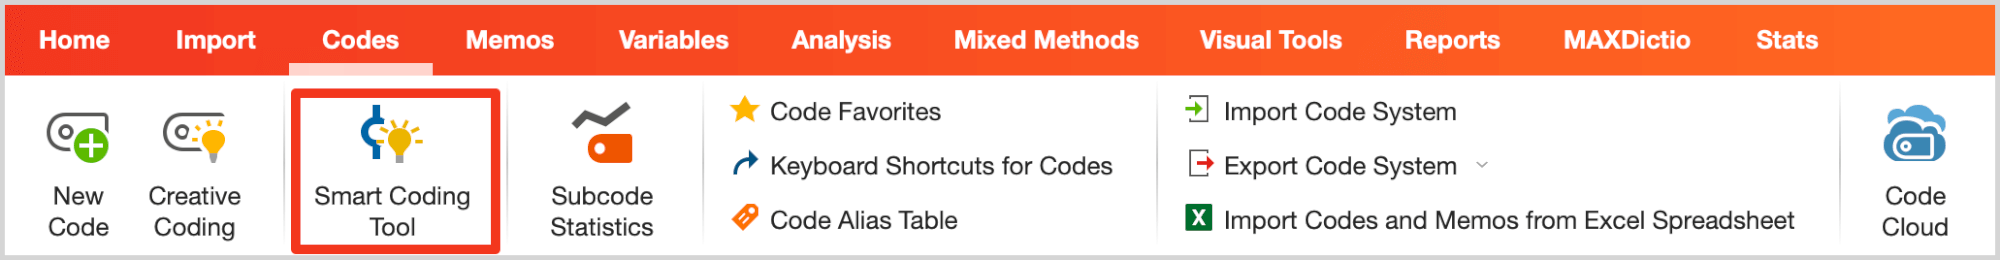 Start Smart Coding Tool in the menu tab “Codes“